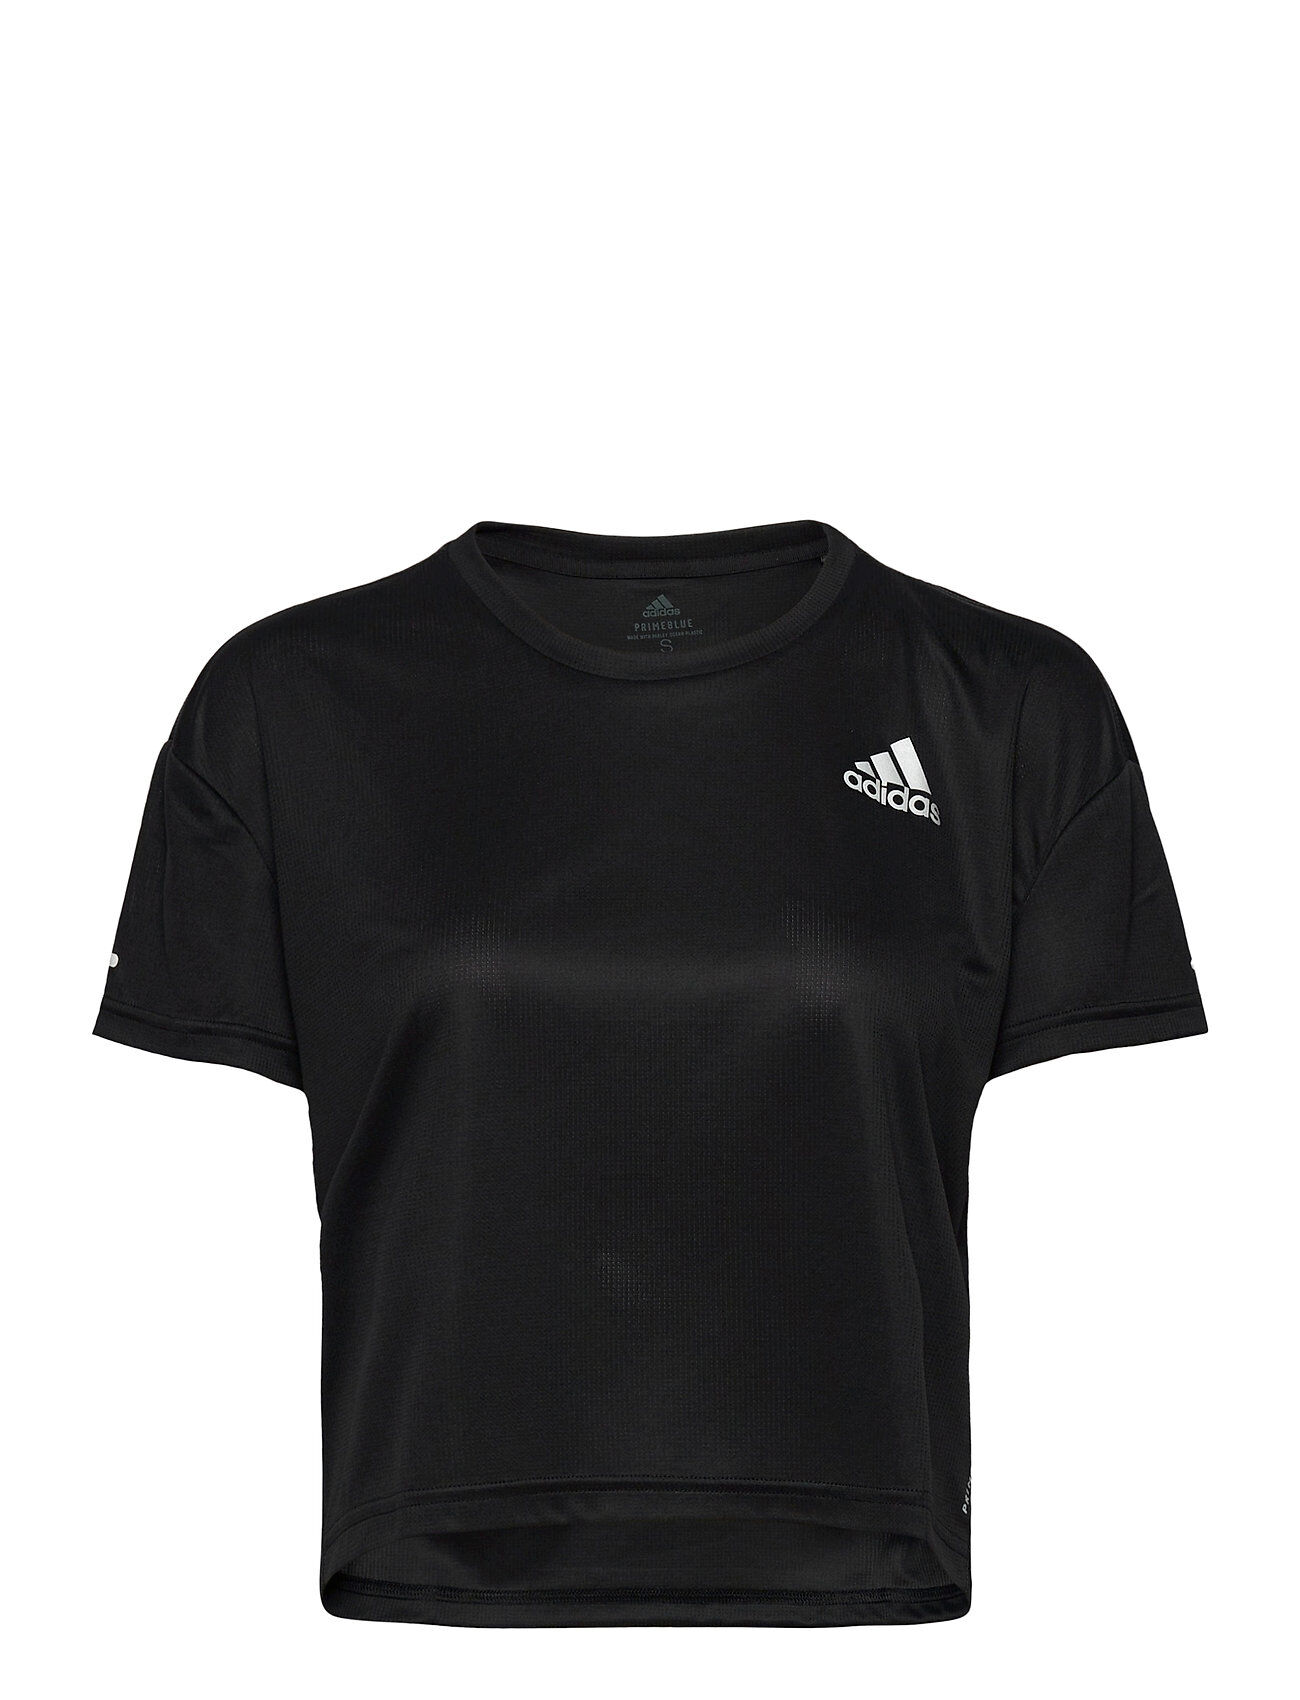 adidas Performance Fast Primeblue Tee W T-shirts & Tops Short-sleeved Svart Adidas Performance